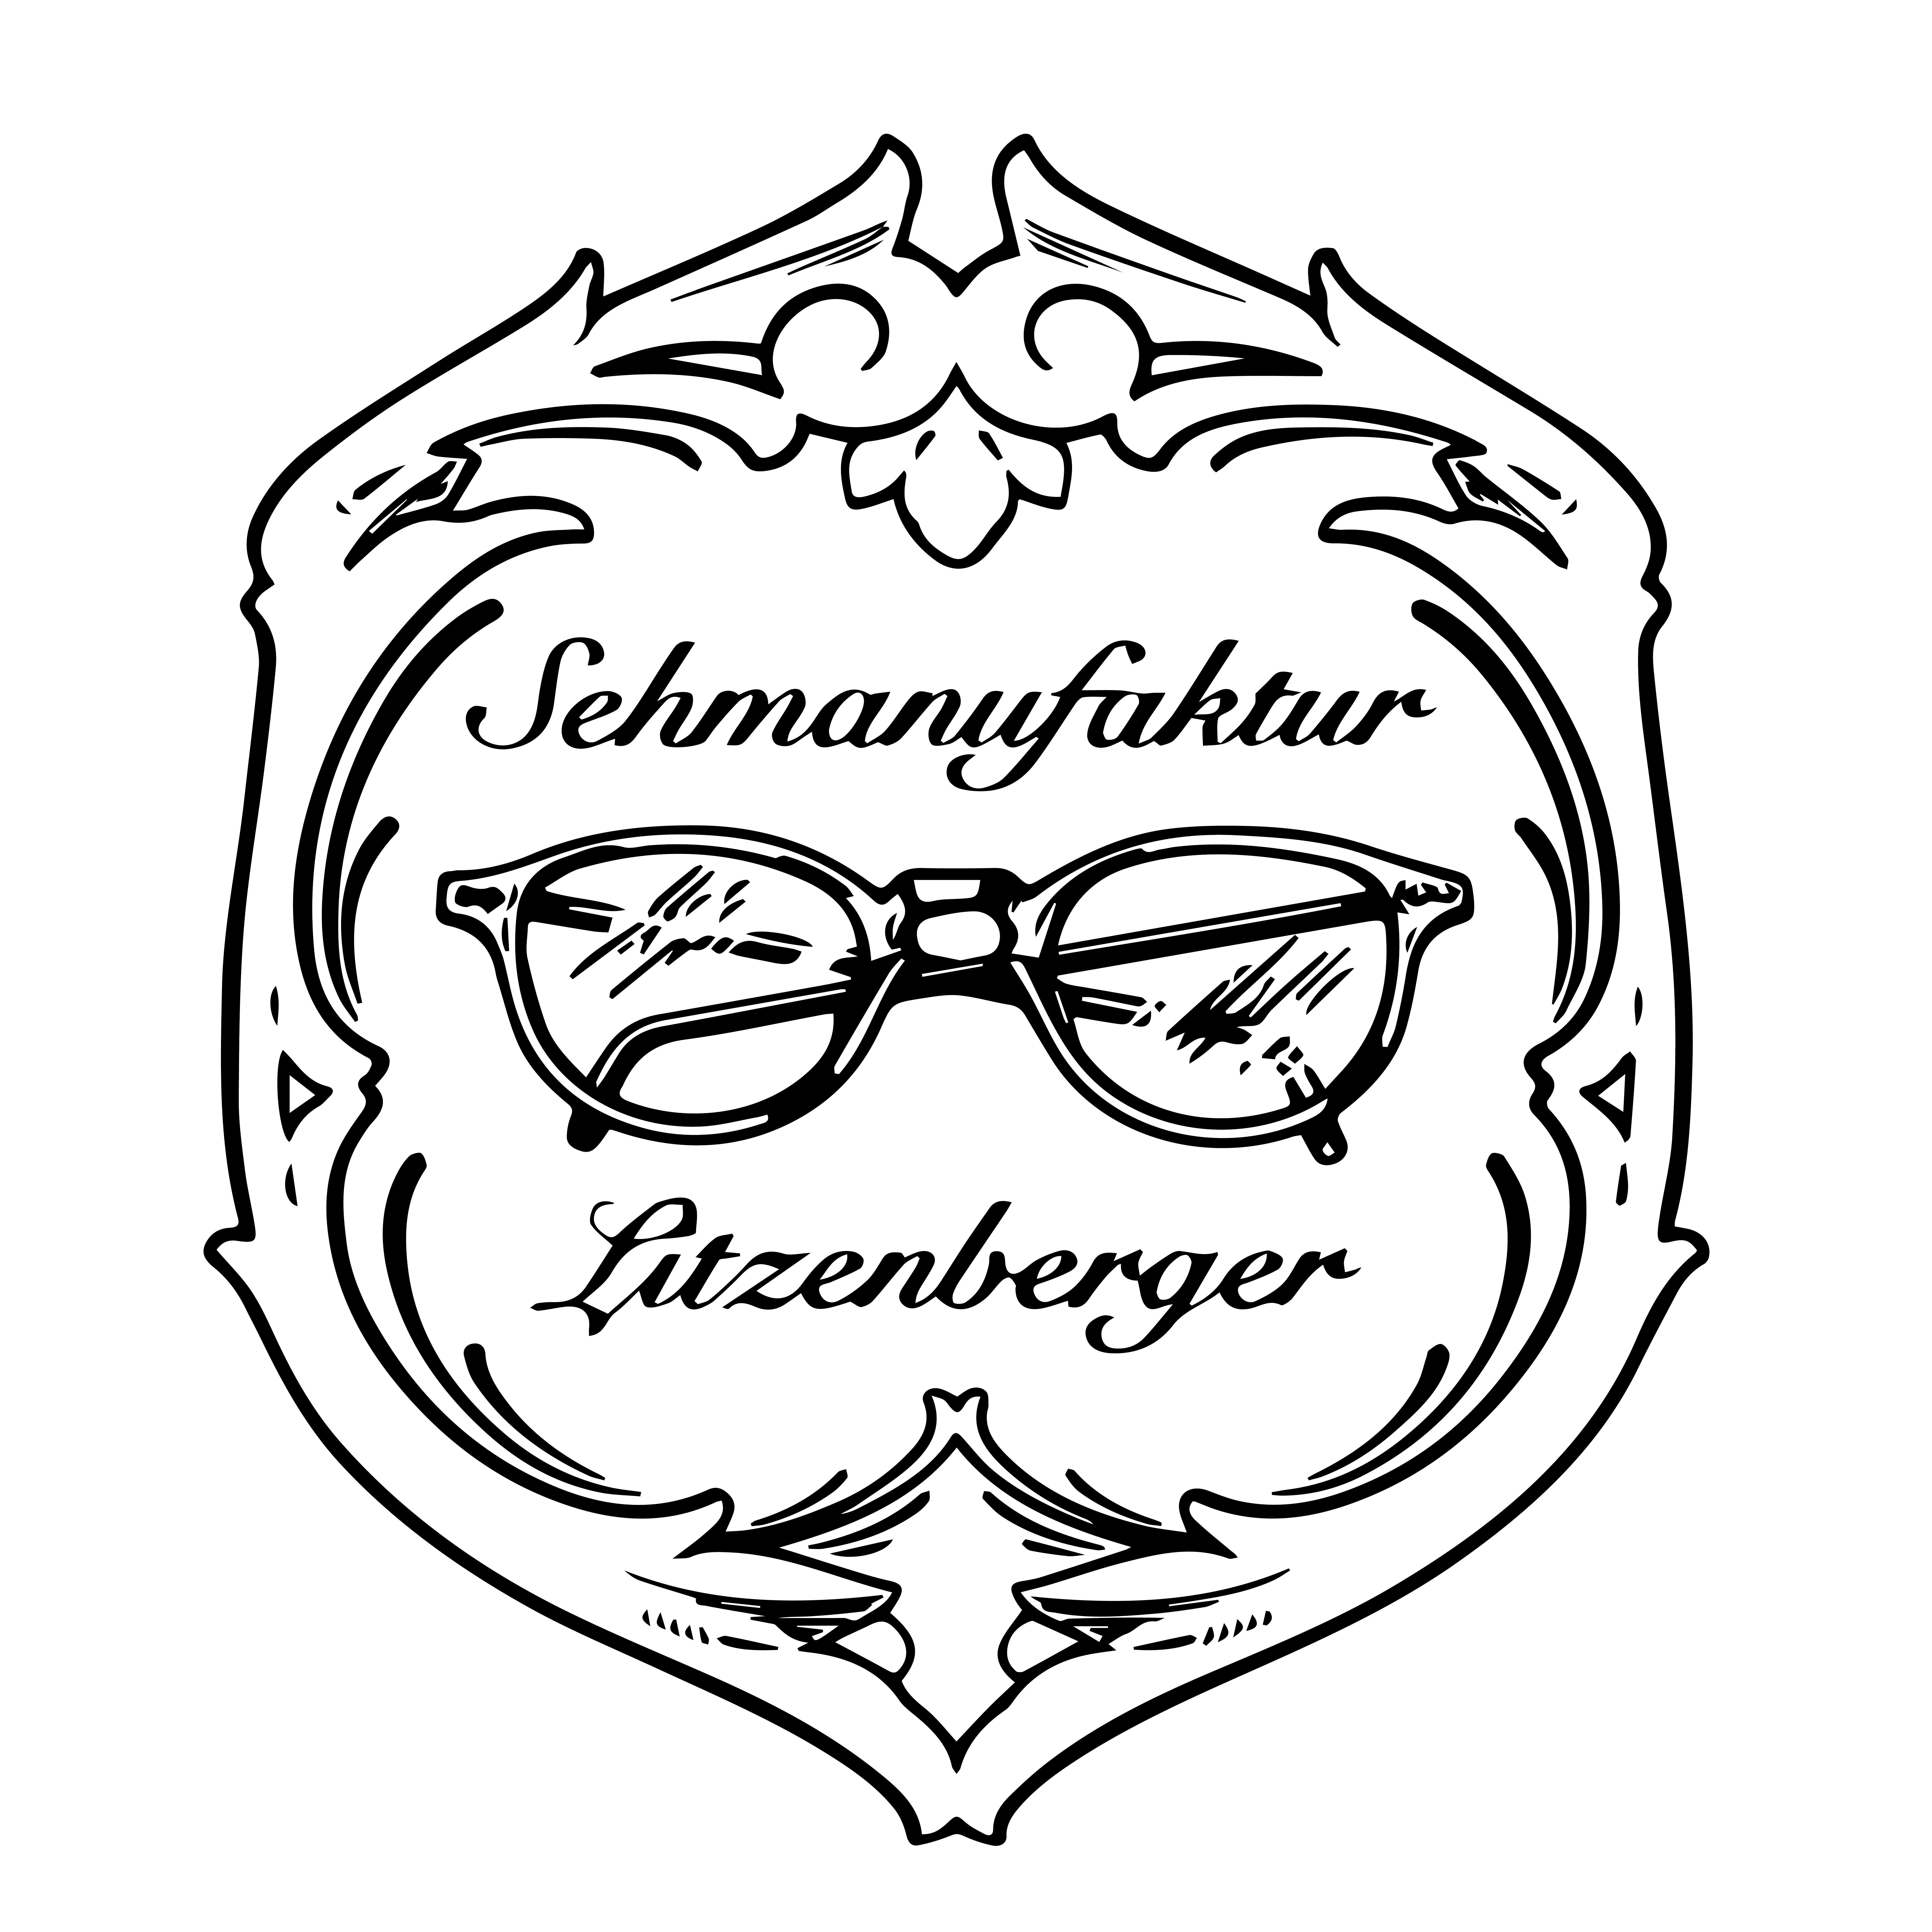 Logo von Sehmanufaktur Litzenberger e. U.